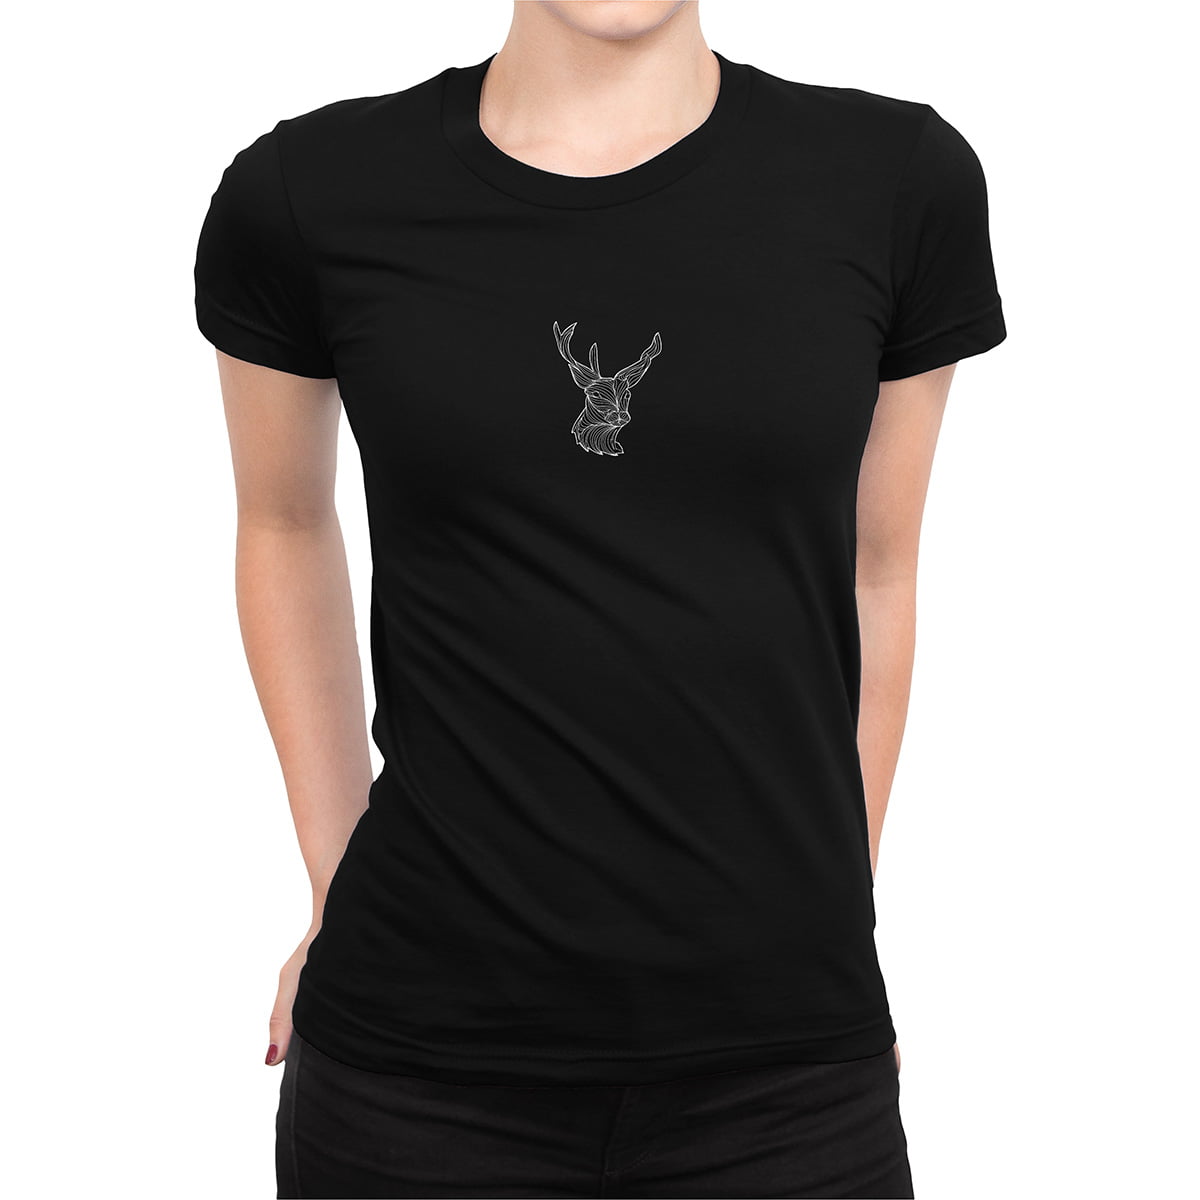 Orjinal geyik mandala beyaz fxsca2194c kadin tshirt siyah orta kucuk - geyik mandala kadın t-shirt - figurex